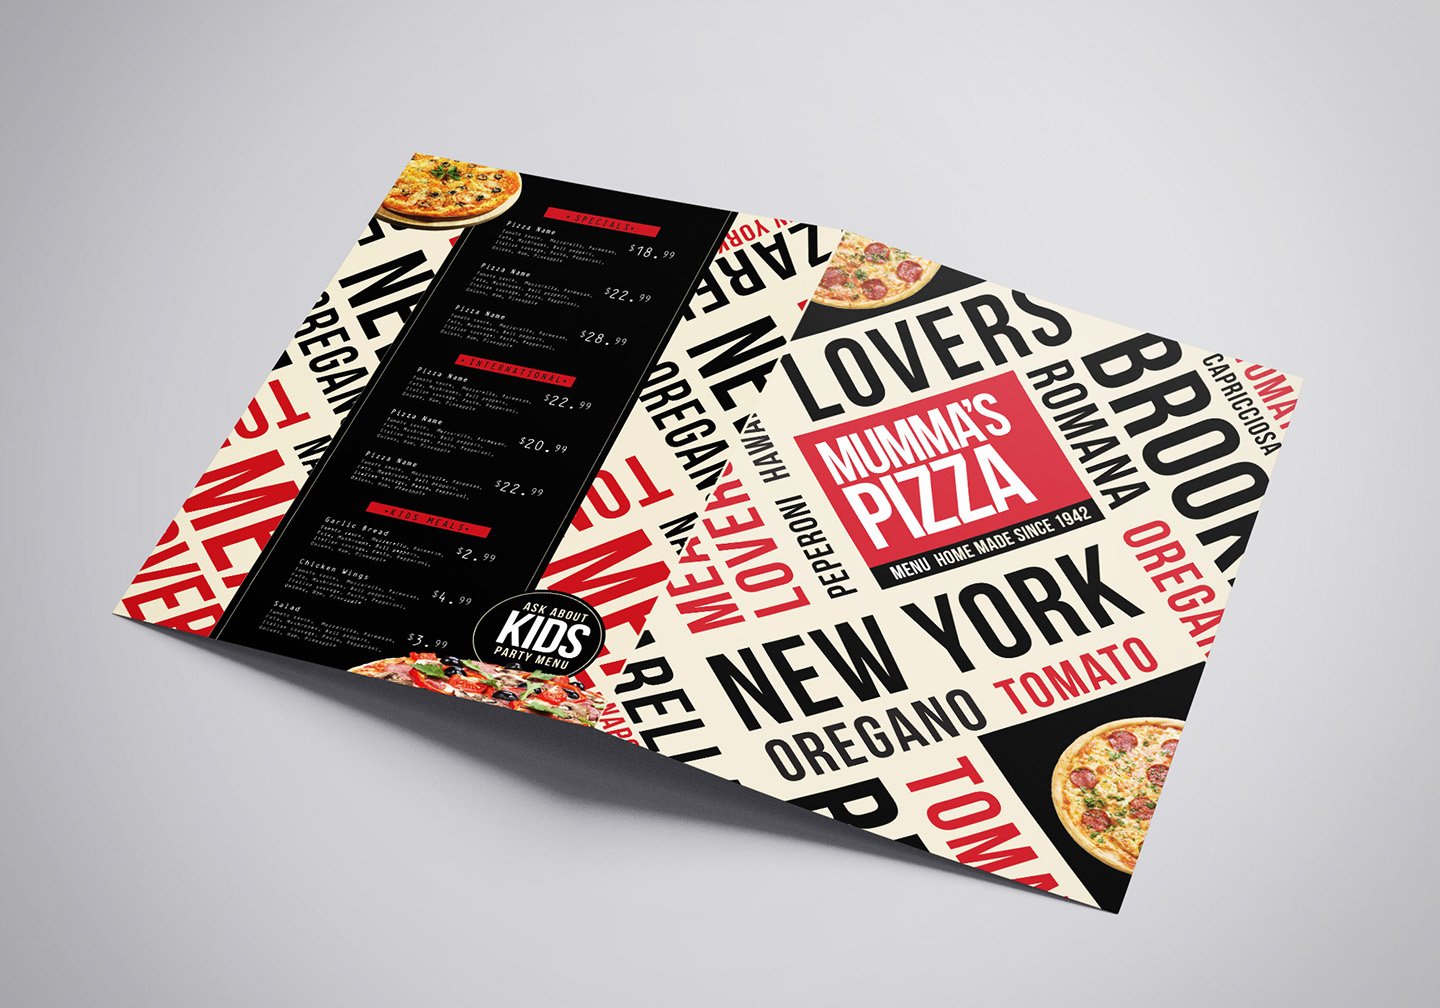 Folding A3 Pizza Menu Template cover image.